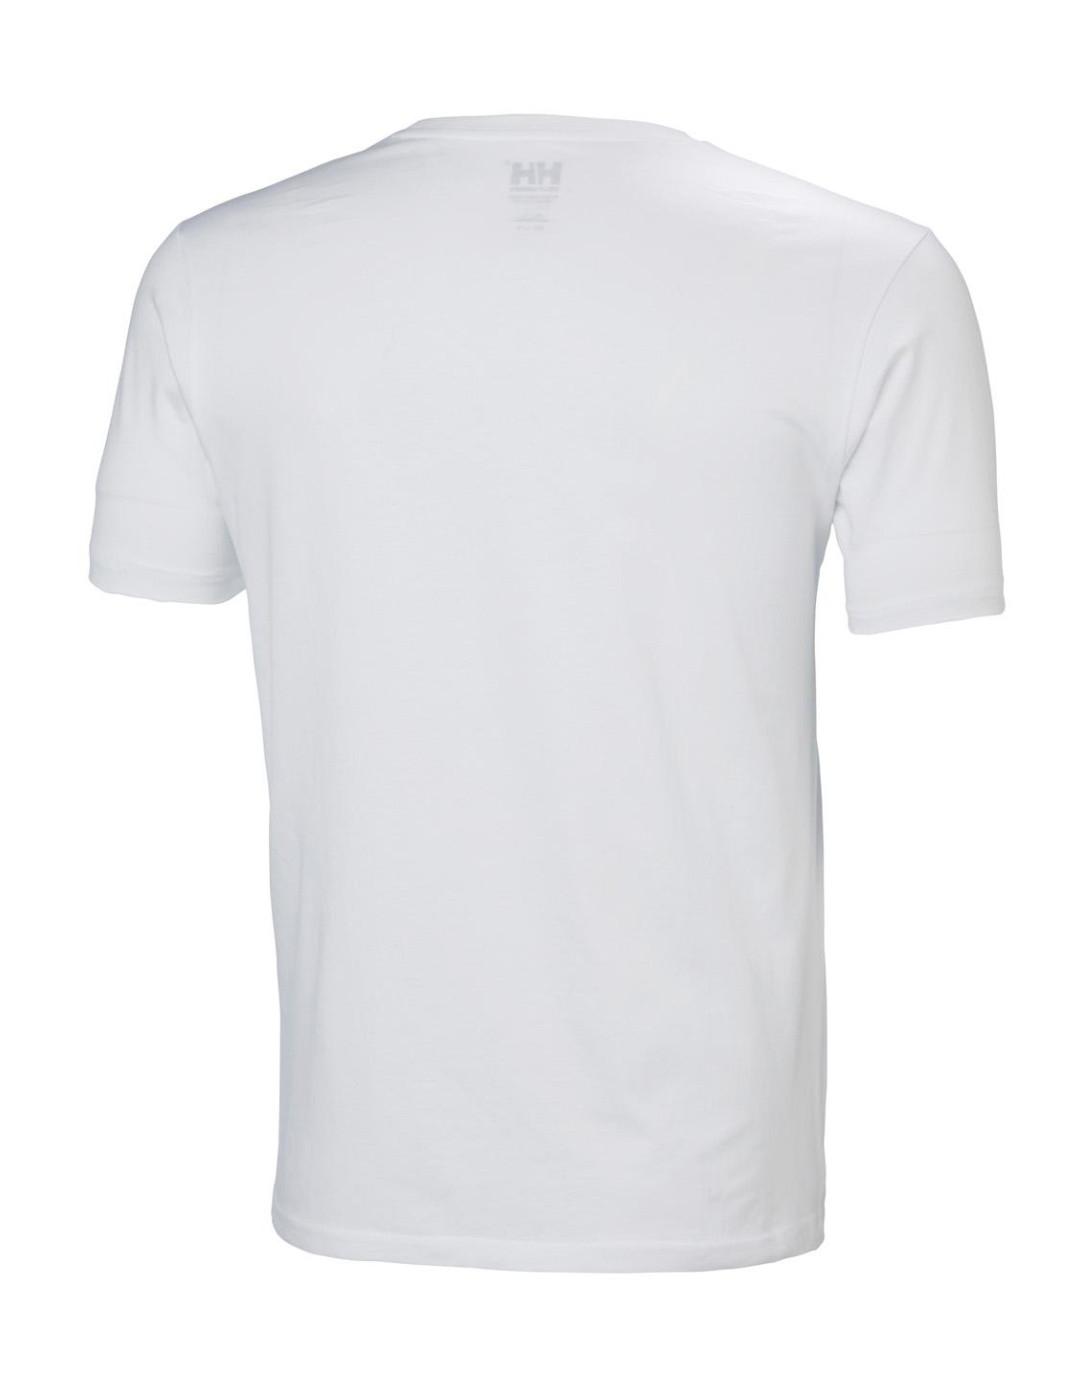 Camiseta Helly Hansen blanca para hombre-b